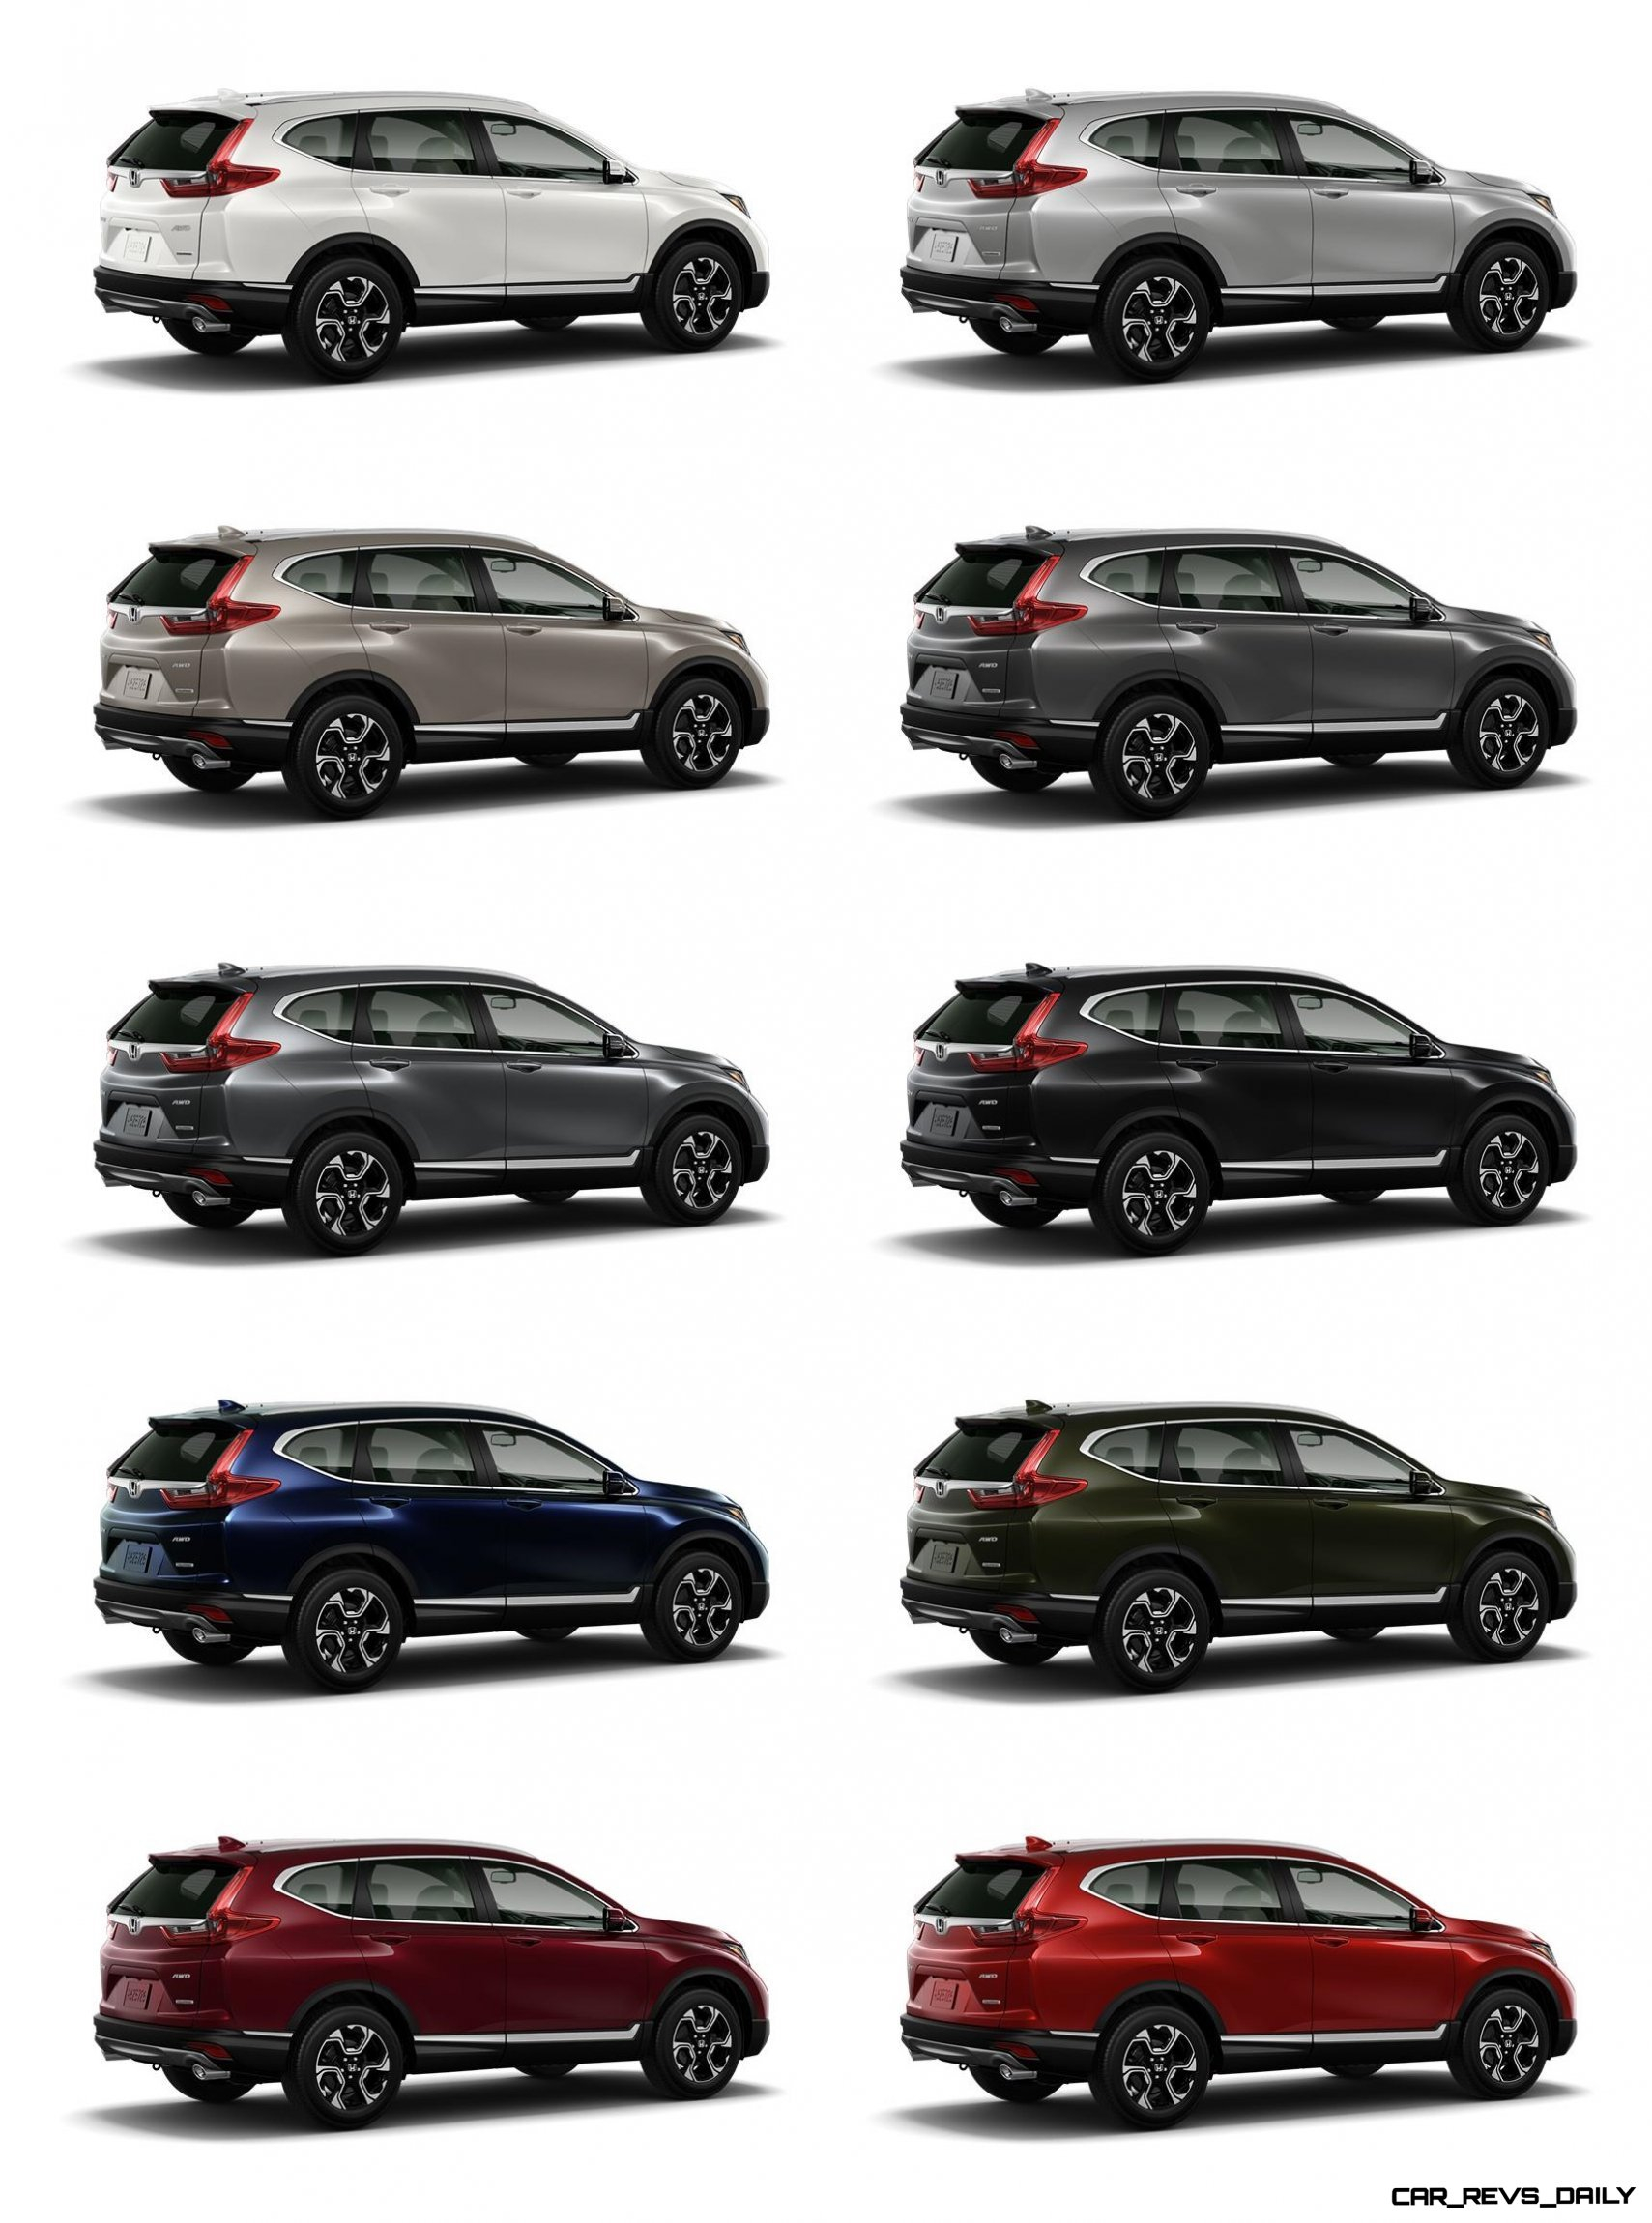 Honda crv кузова. Цвета Хонда ЦРВ 3. Хонда СРВ цвета кузова. Honda CR-V 4 цвета кузова. Цвета Хонда СРВ 5 поколения.